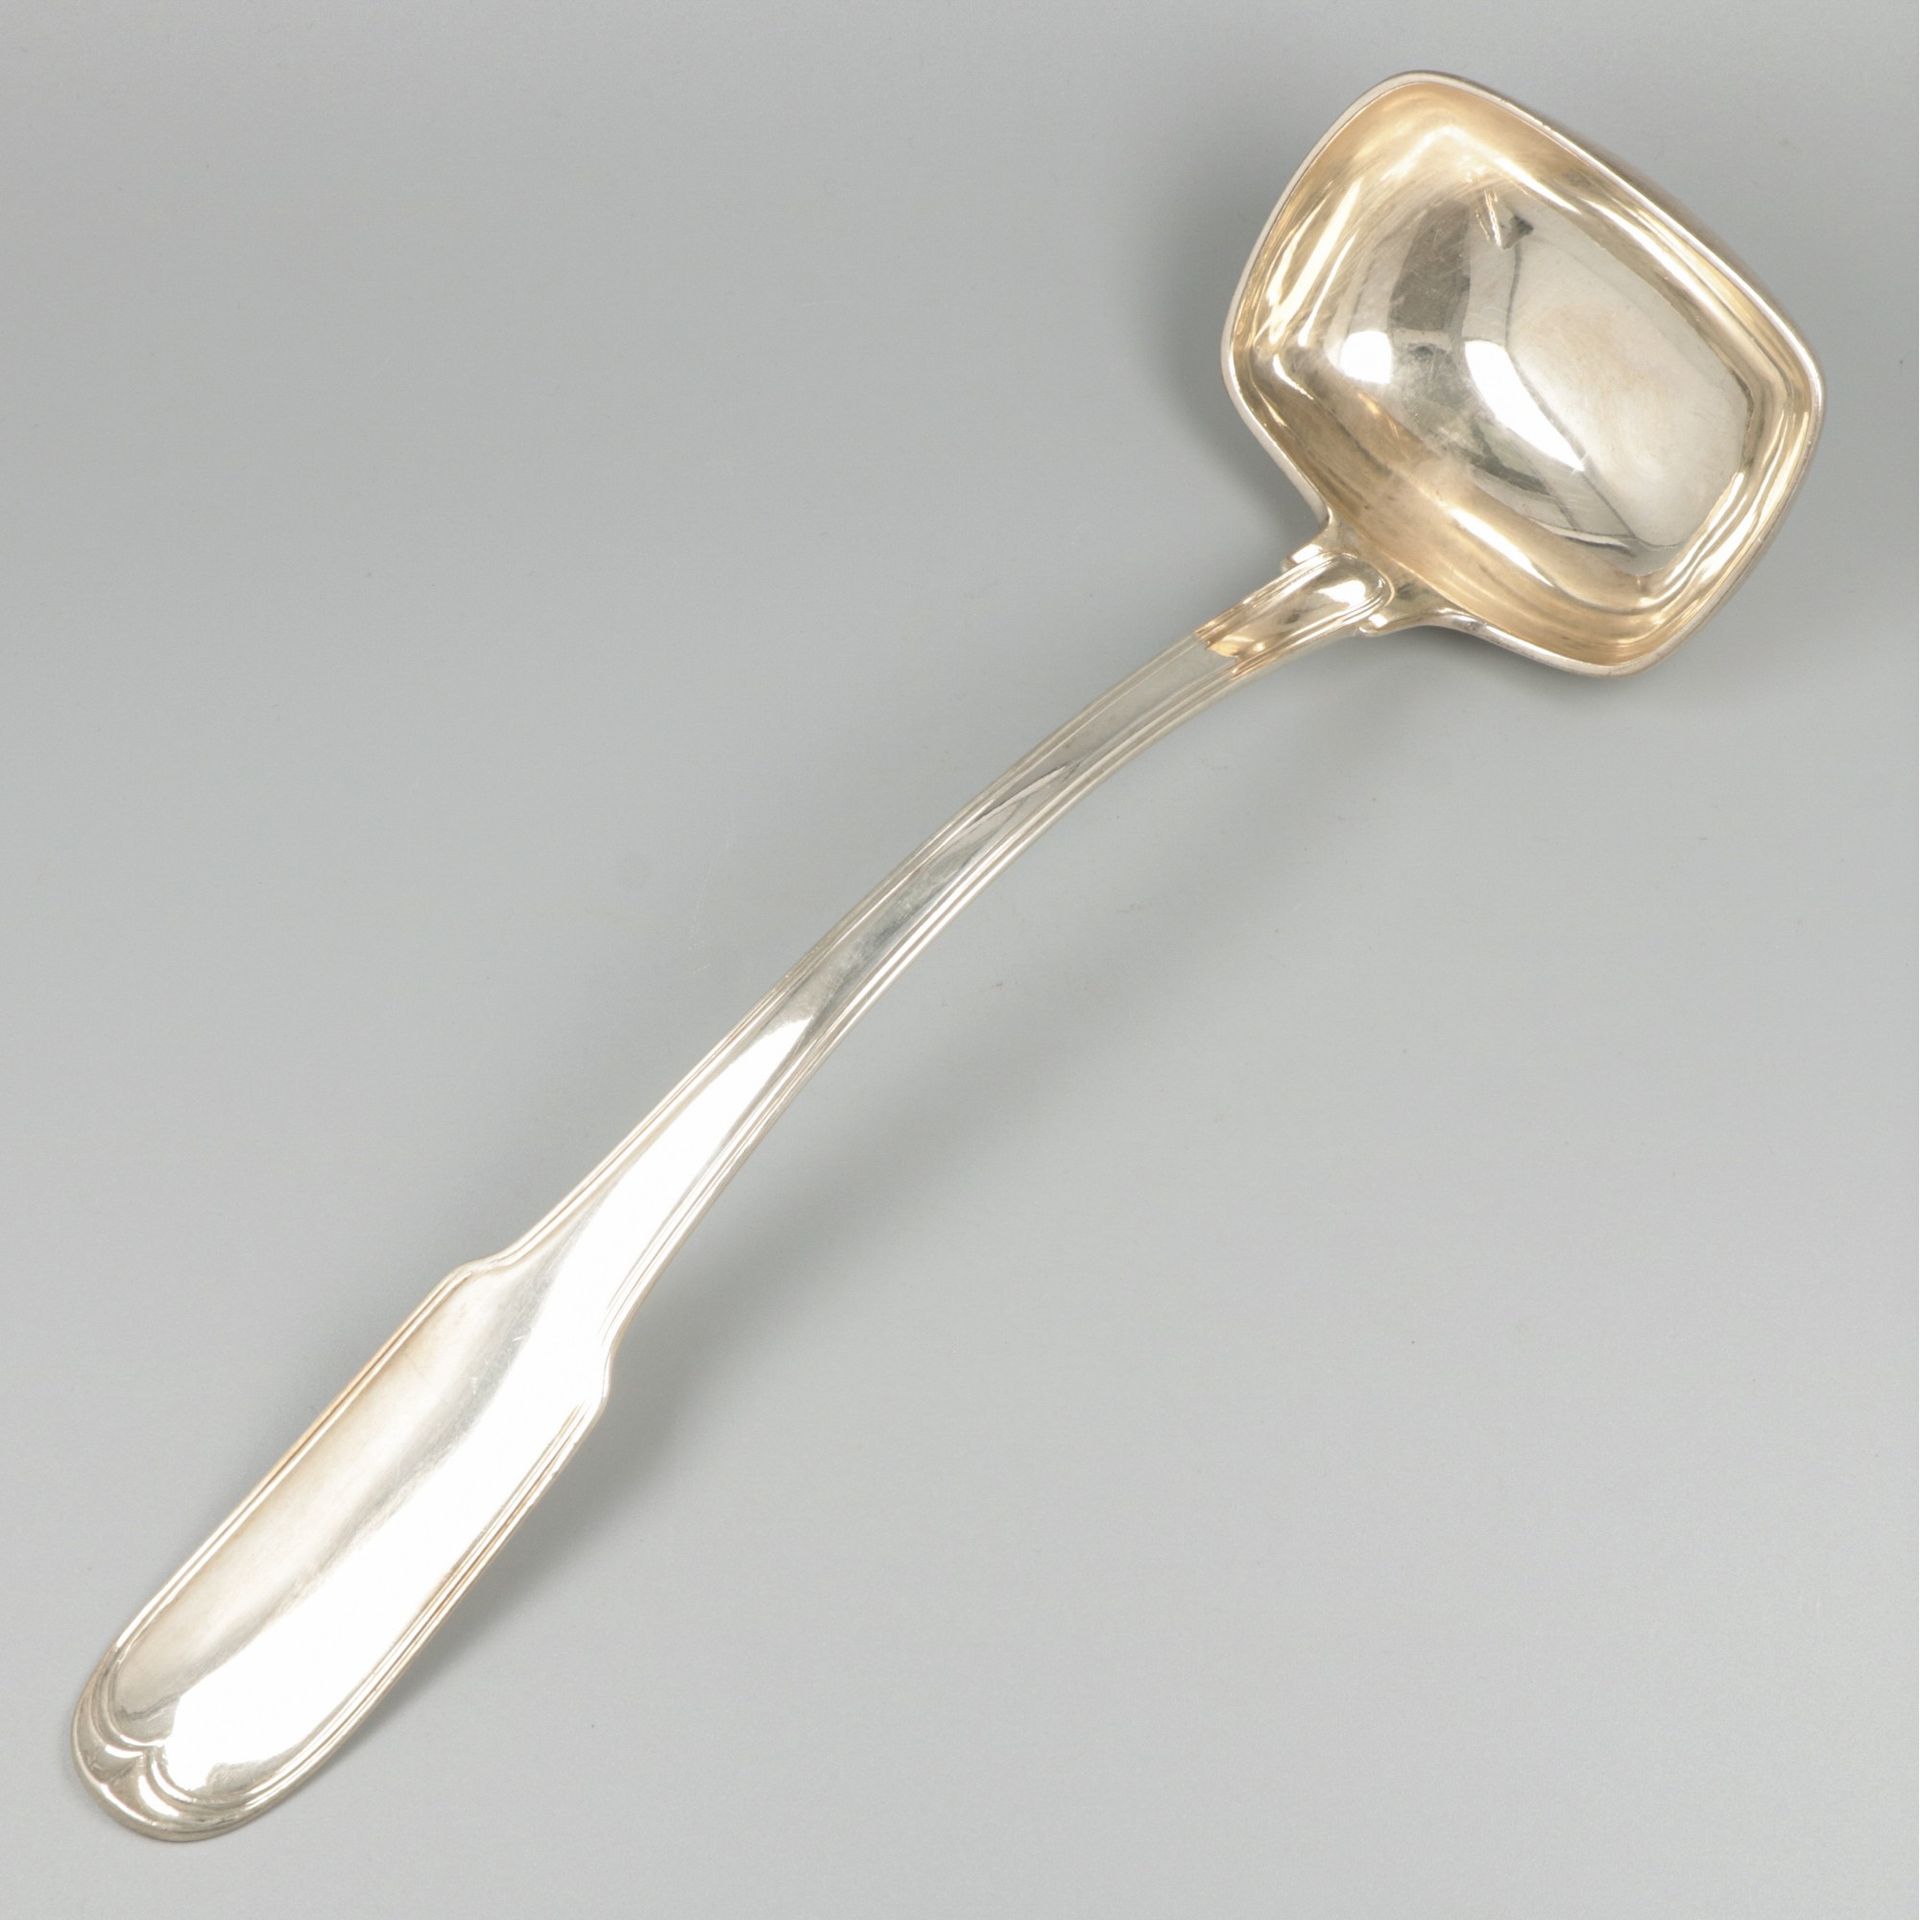 Soup ladle silver. Large model with rectangular bowl, "Hartfilet" or Heart Filet&hellip;